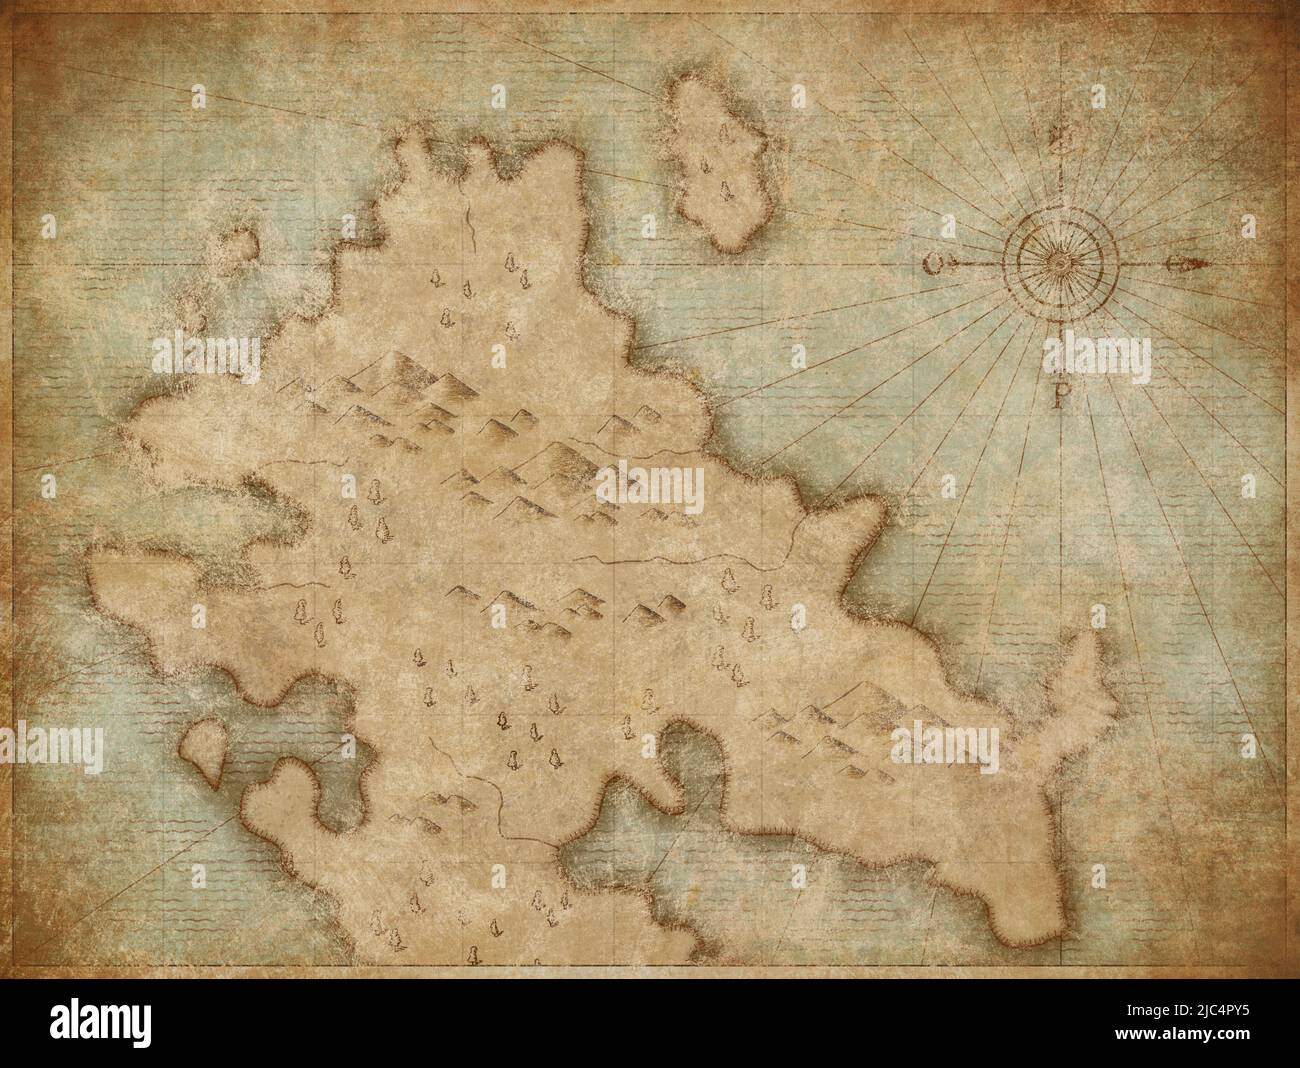 mapa náutico medieval de piratas con tesoros ocultos Foto de stock